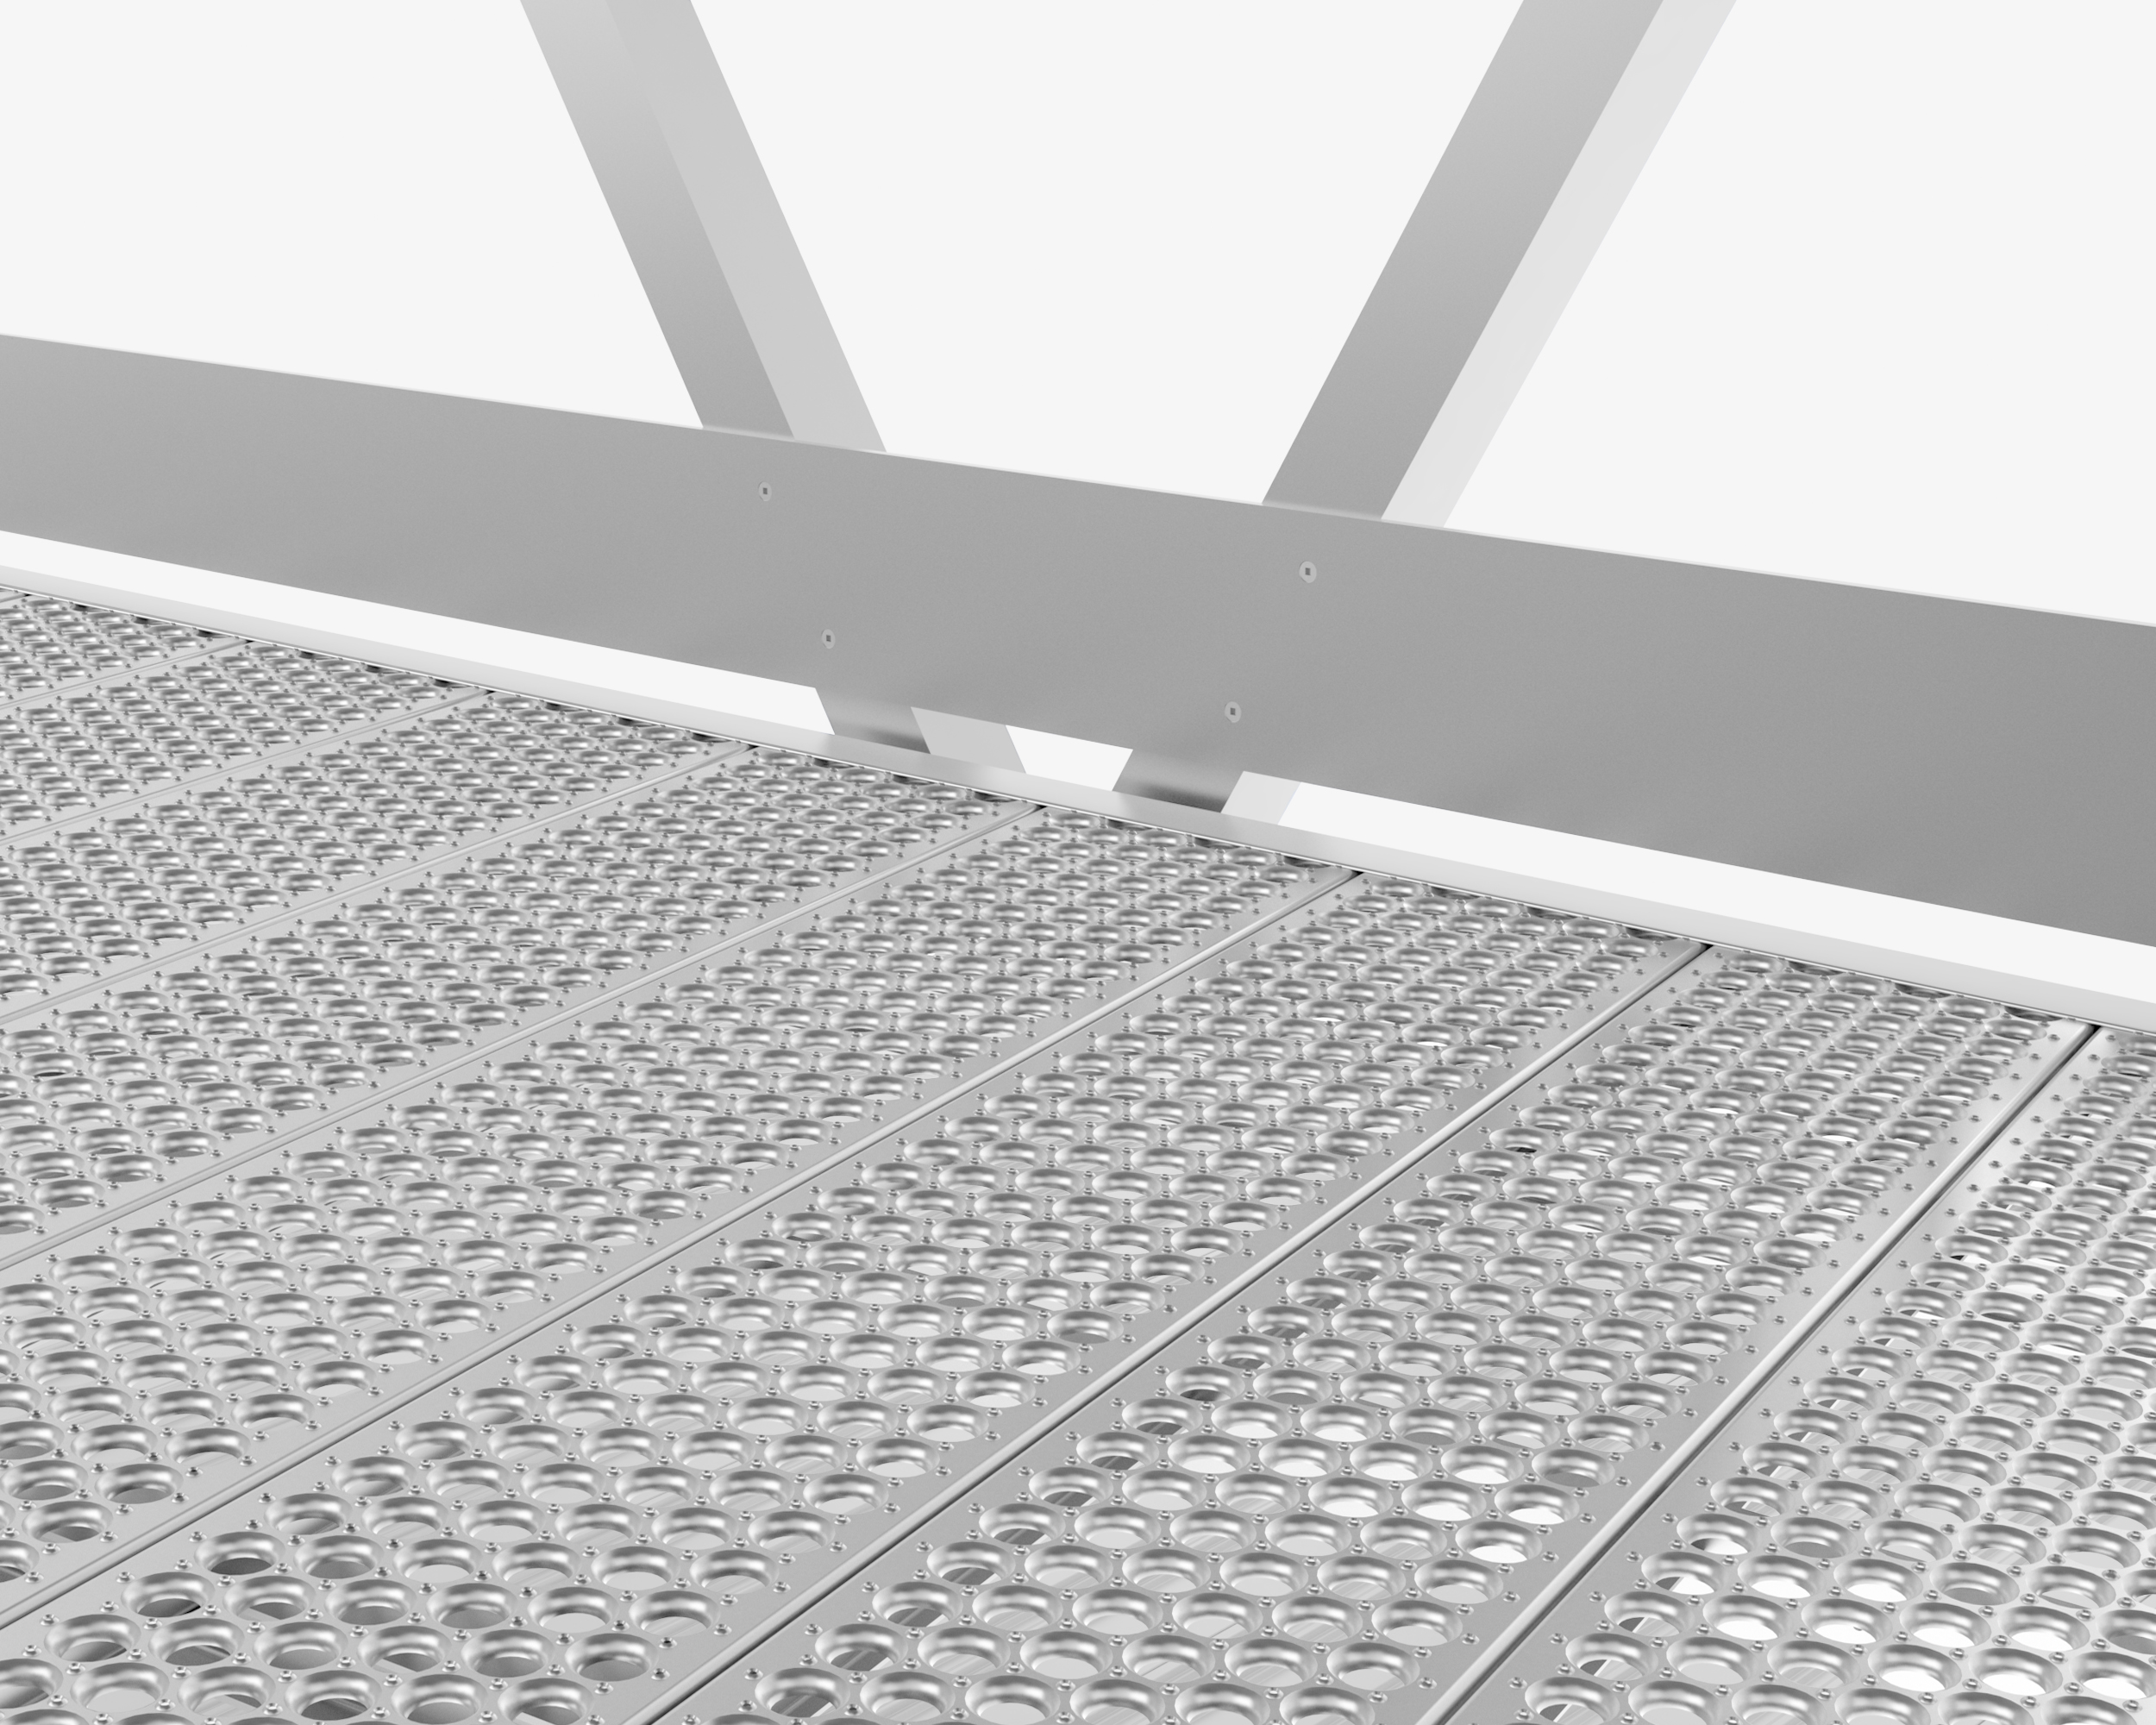 Shur grip aluminum decking with integrated kick plate on custom pedestrian bridge